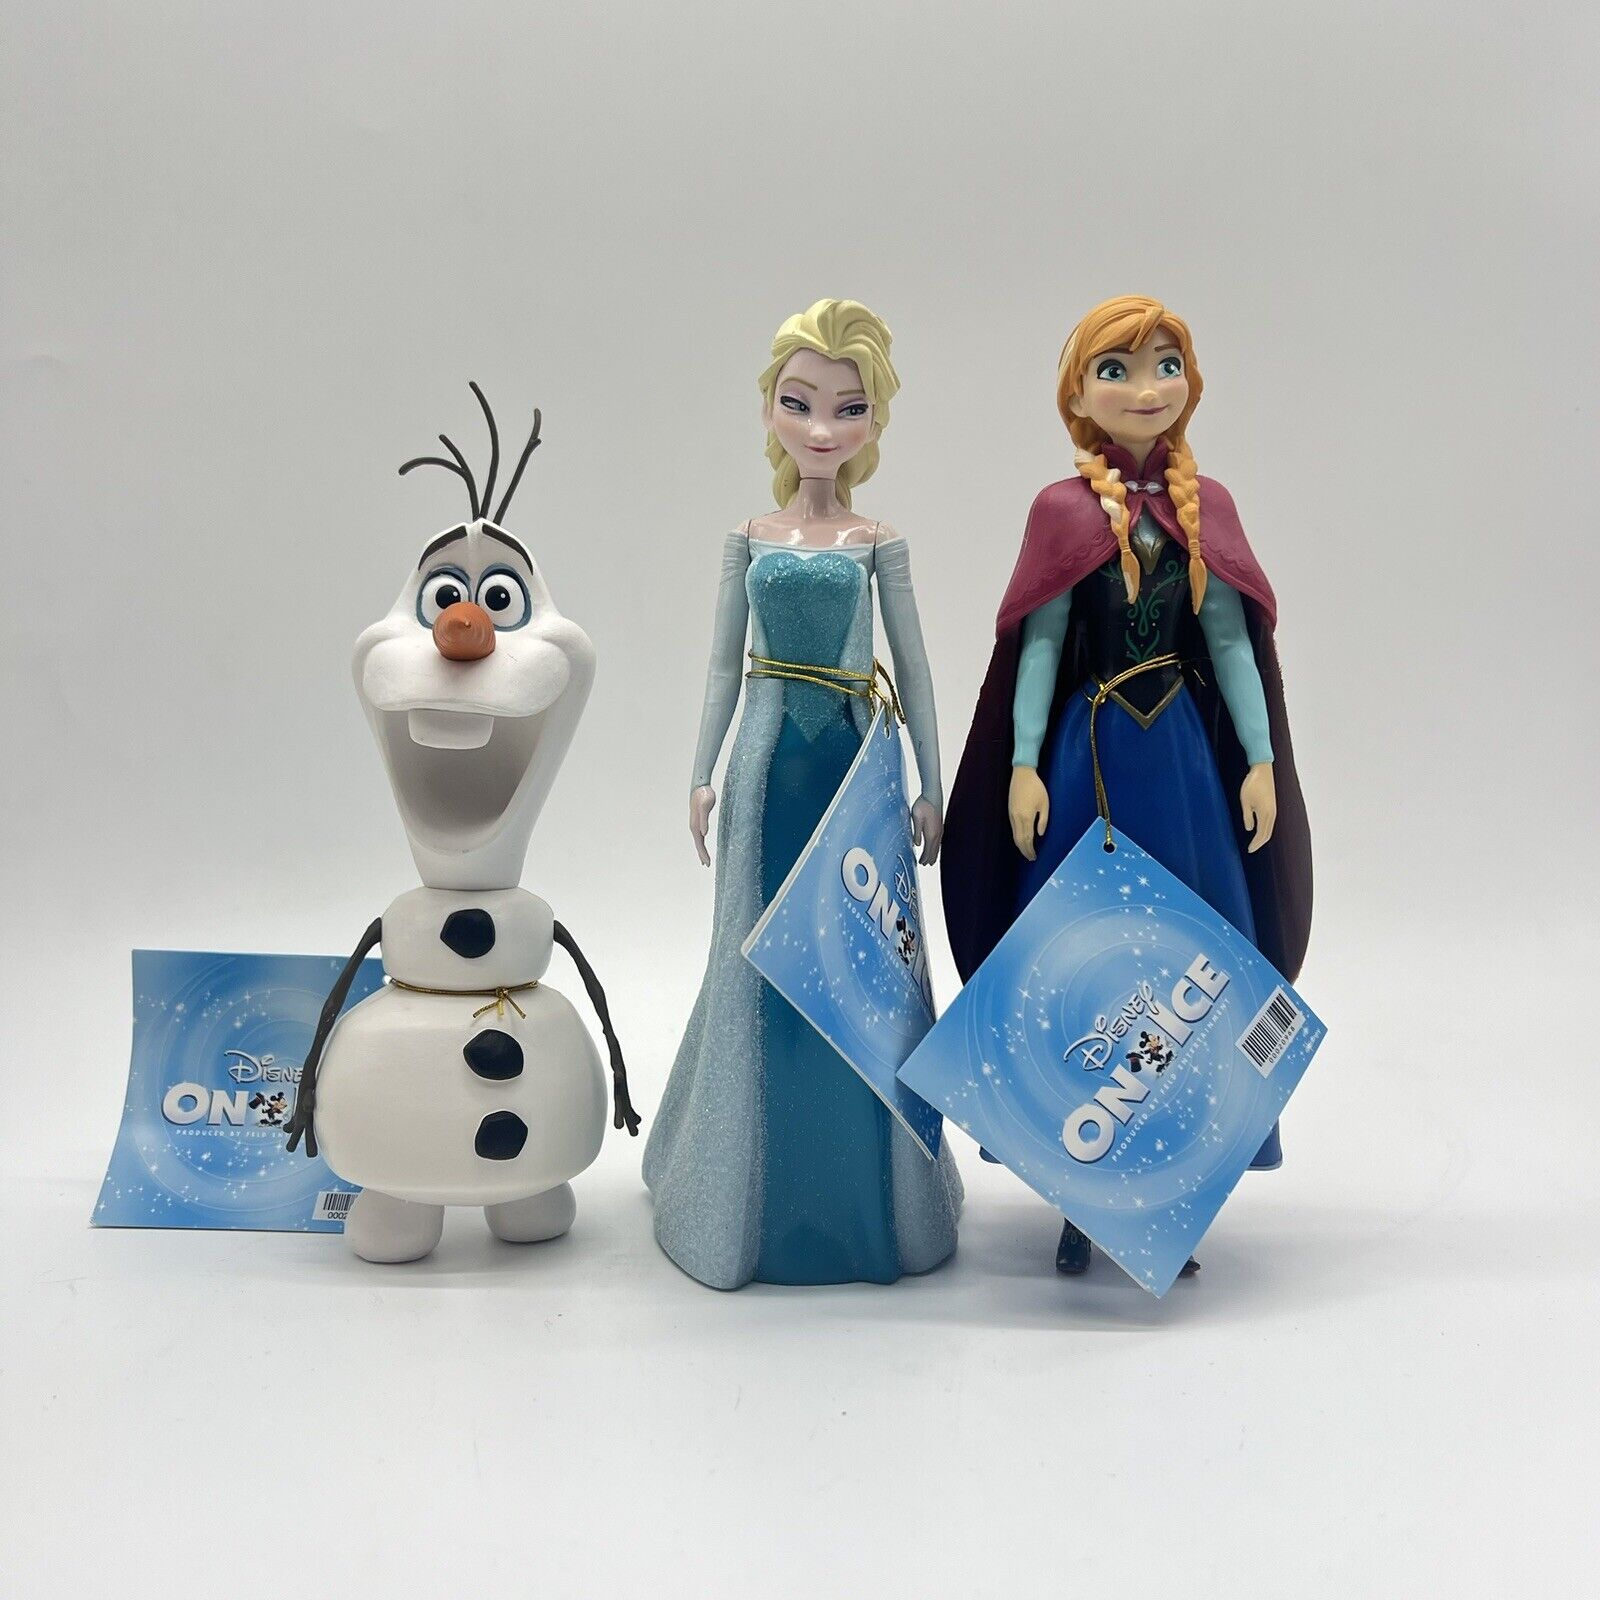 Disney On Ice Frozen Figurines Set of 3 Figures Elsa Olaf Anna New HTF